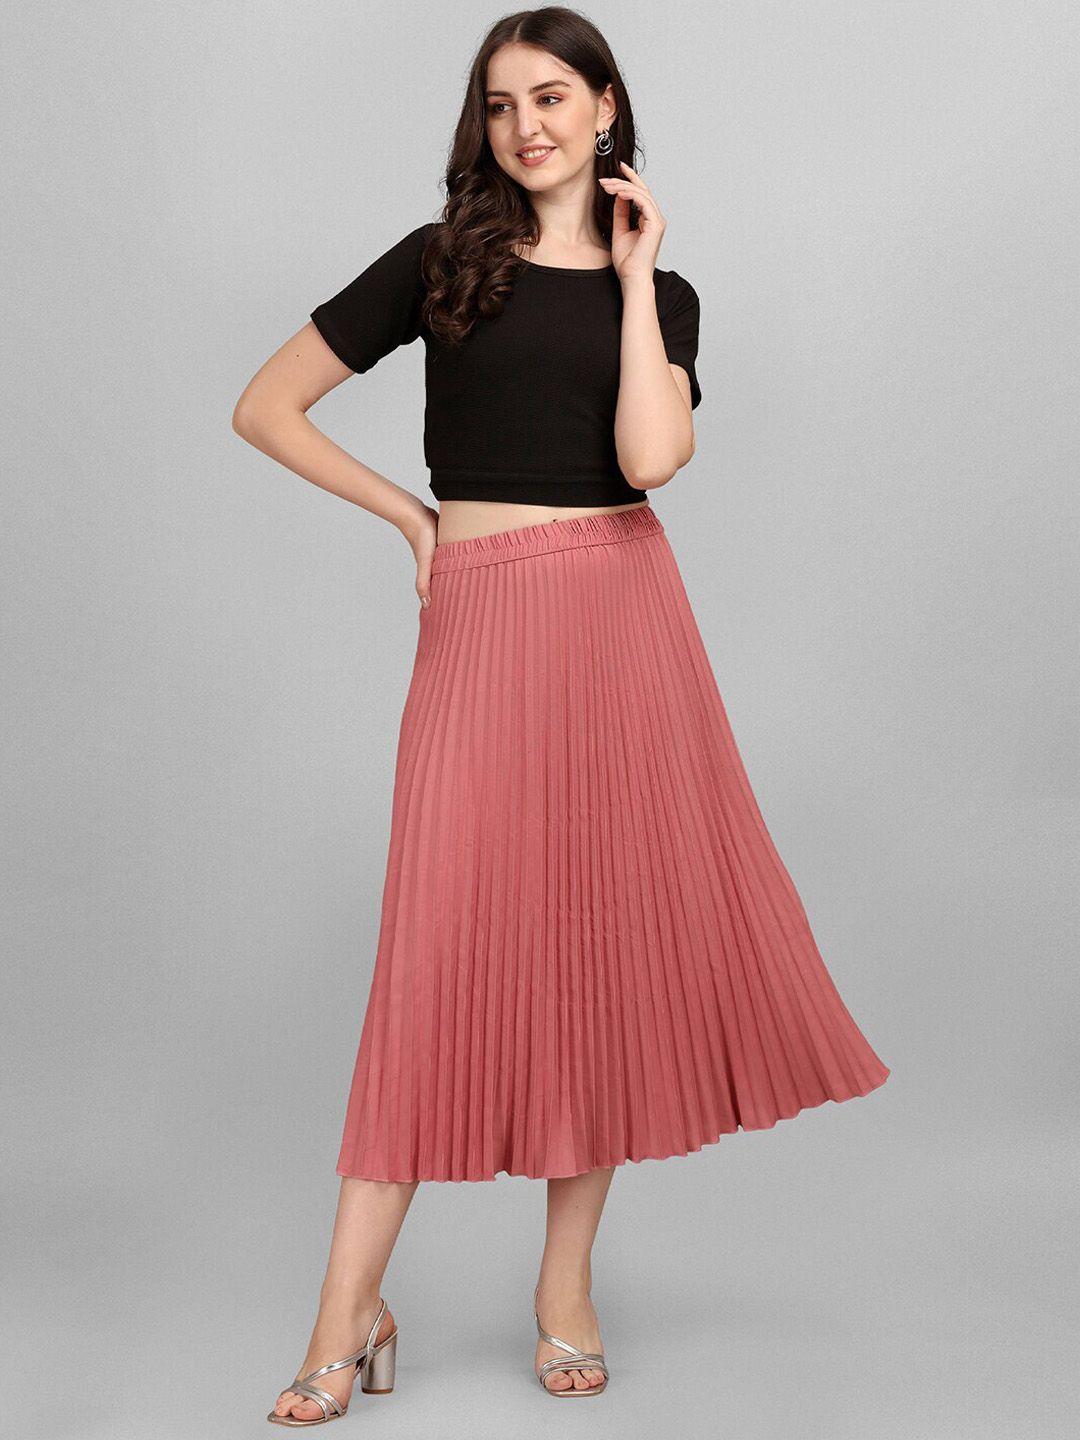 deklook dyed a-line midi skirt